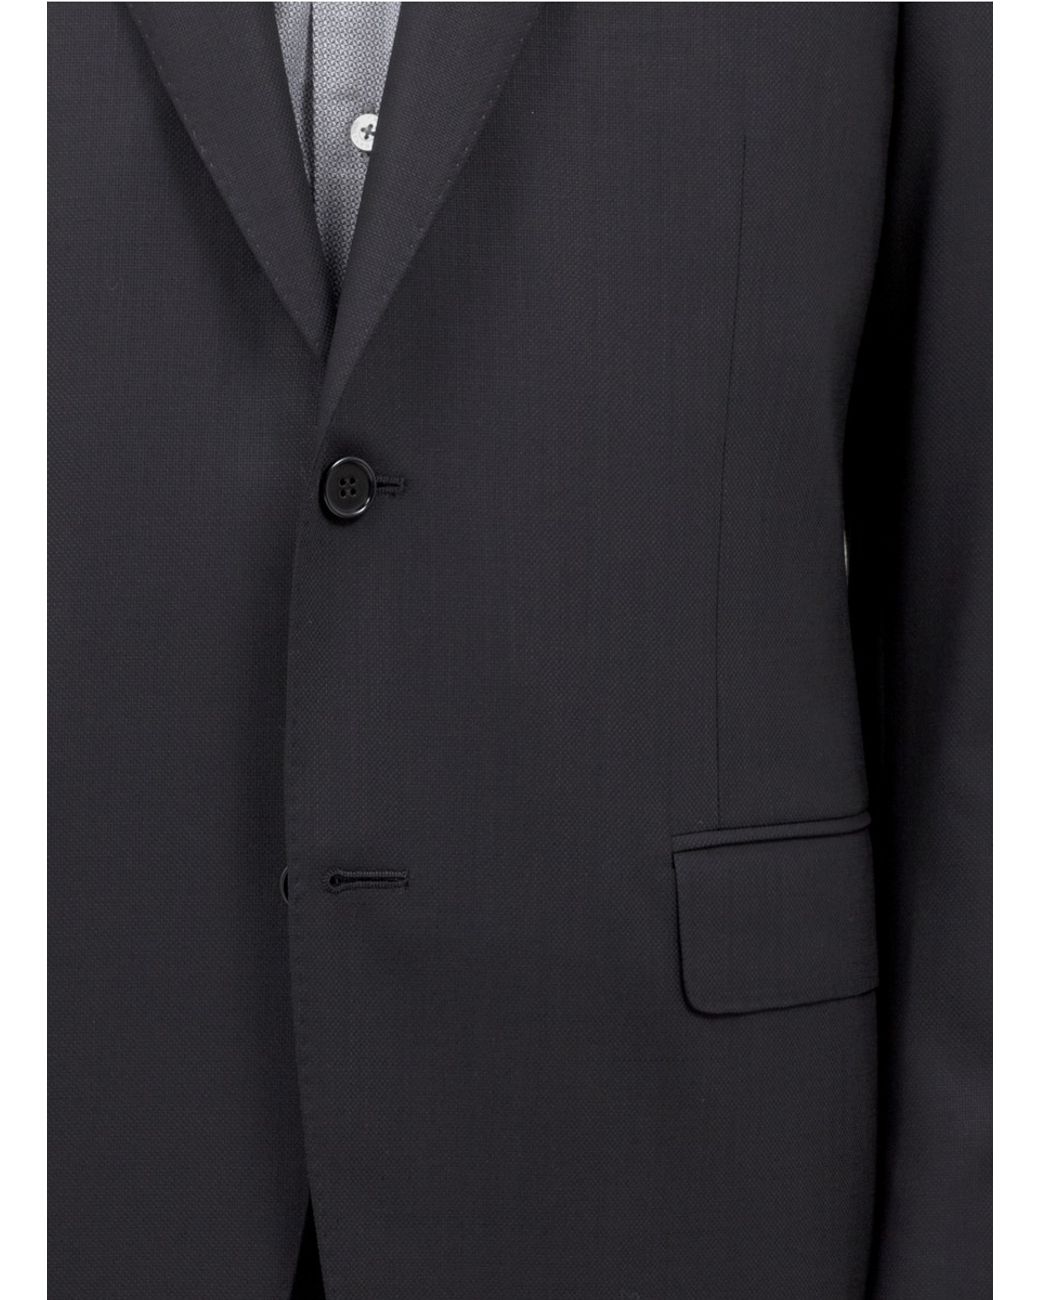 Canali Water-resistant Travel Blazer in Black for Men | Lyst